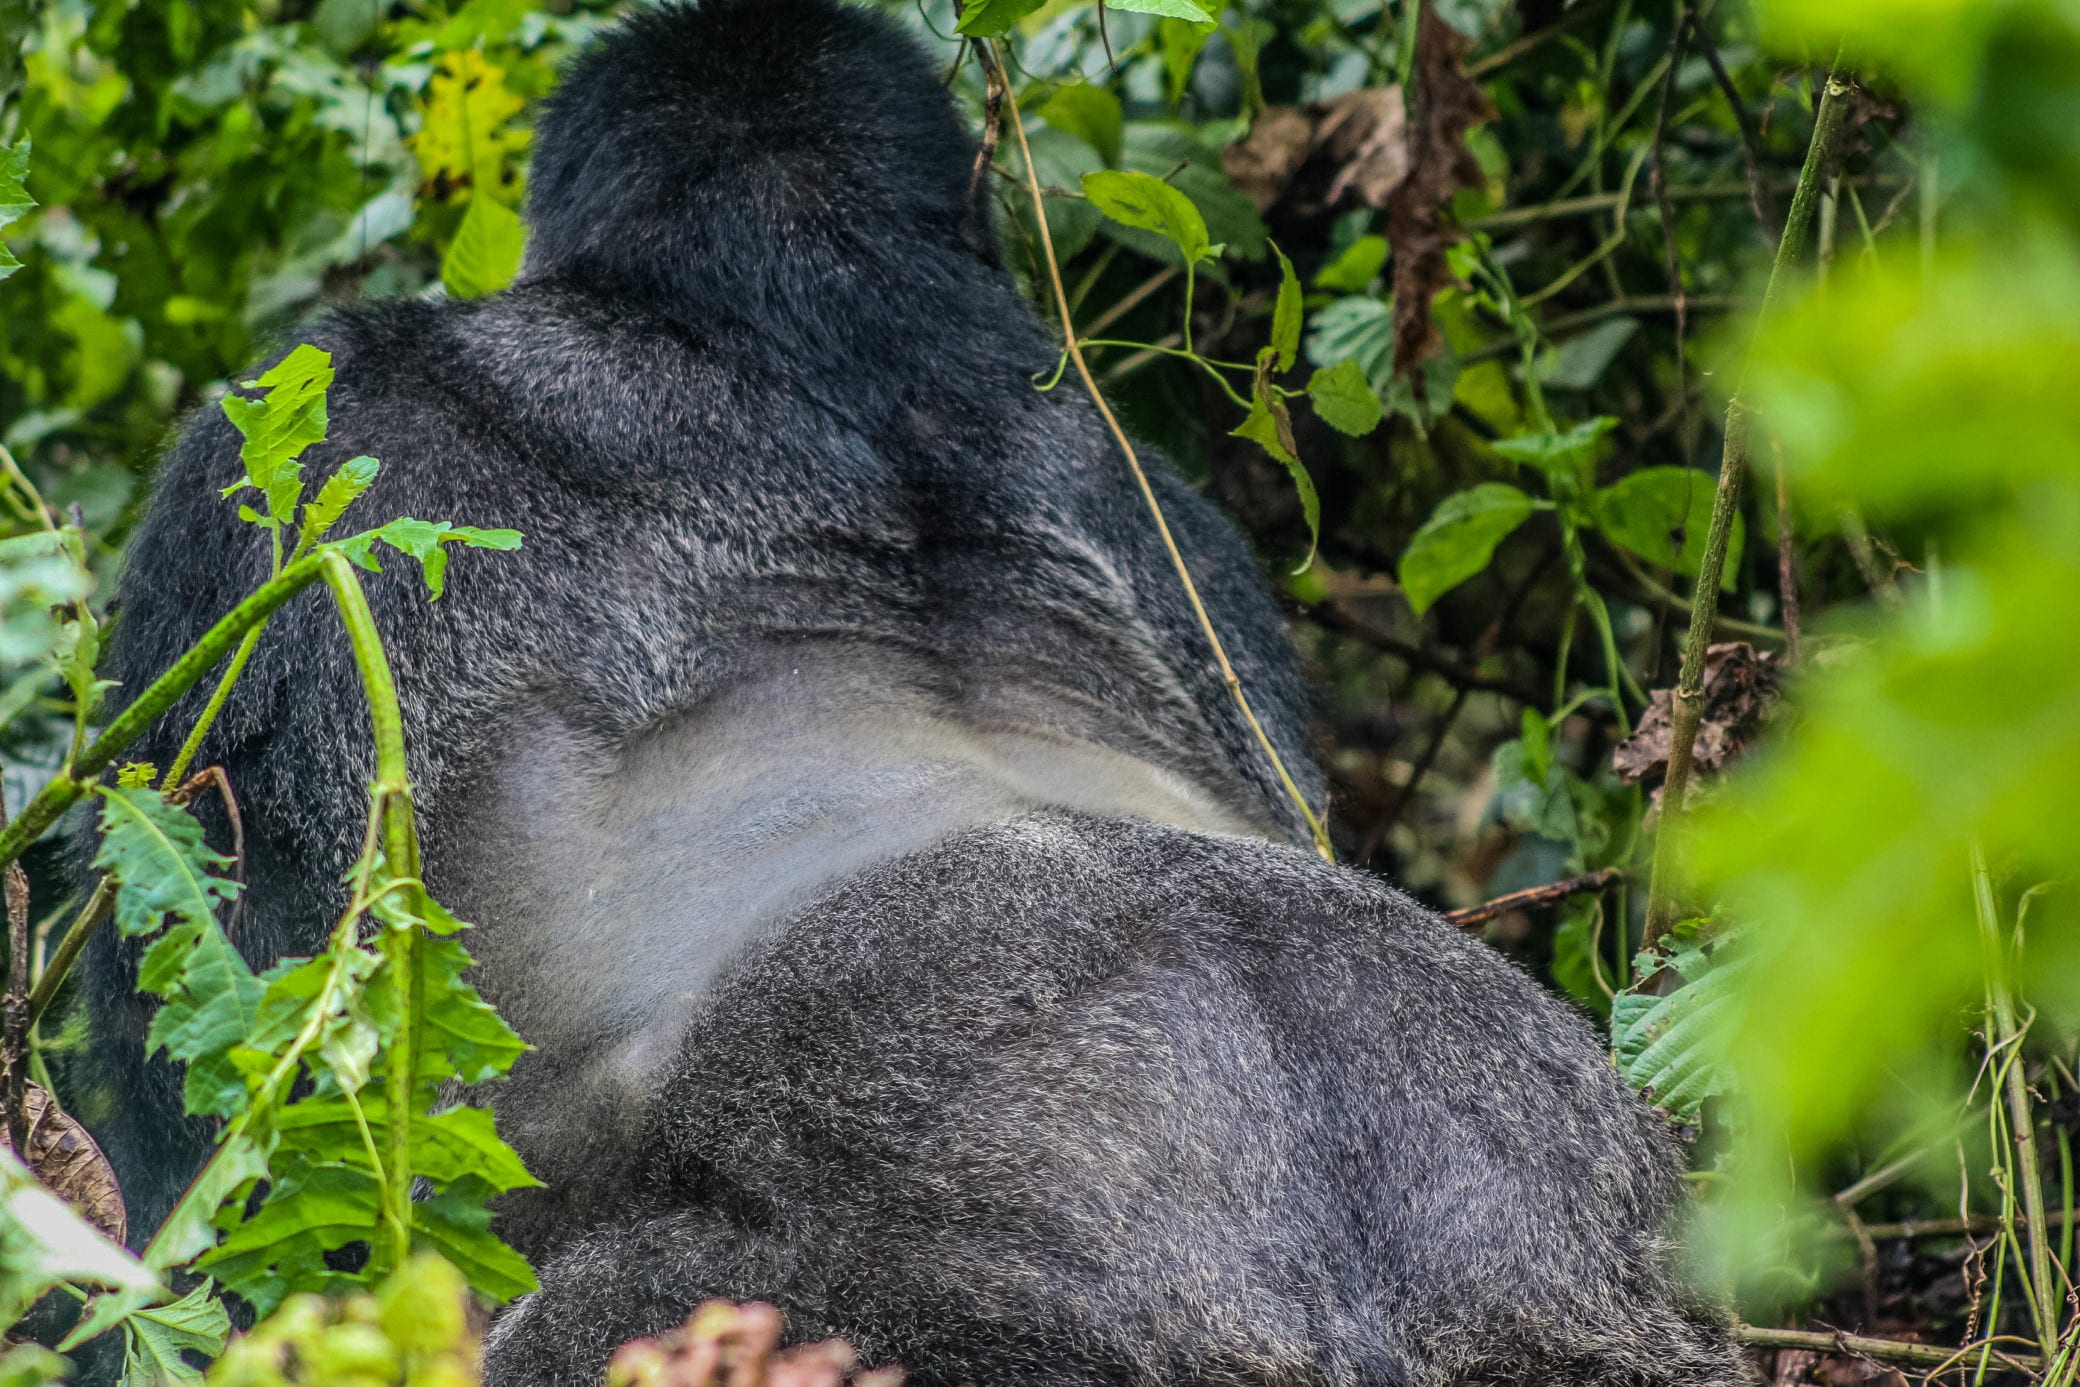 Image of gorilla silverback